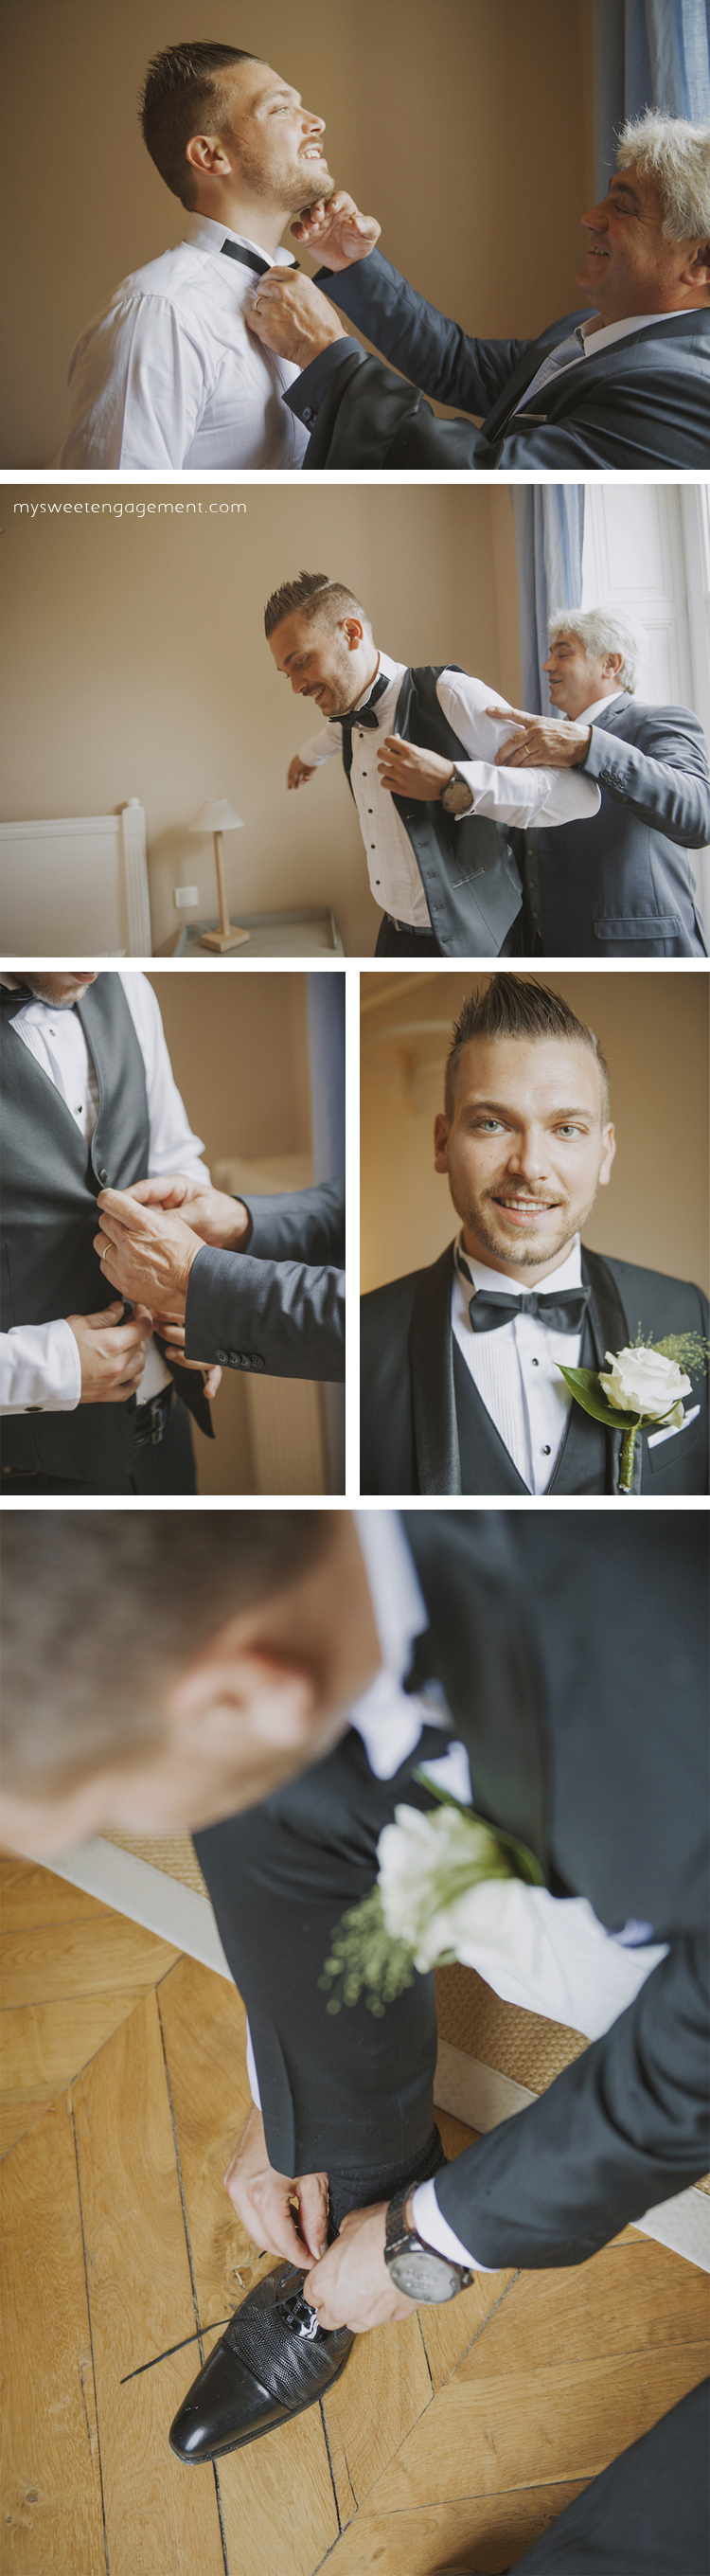 making of noivo com o pai - gravata borboleta - lapela boutonniere - colete - terno - sapato masculino - blog de casamento - my sweet engagement